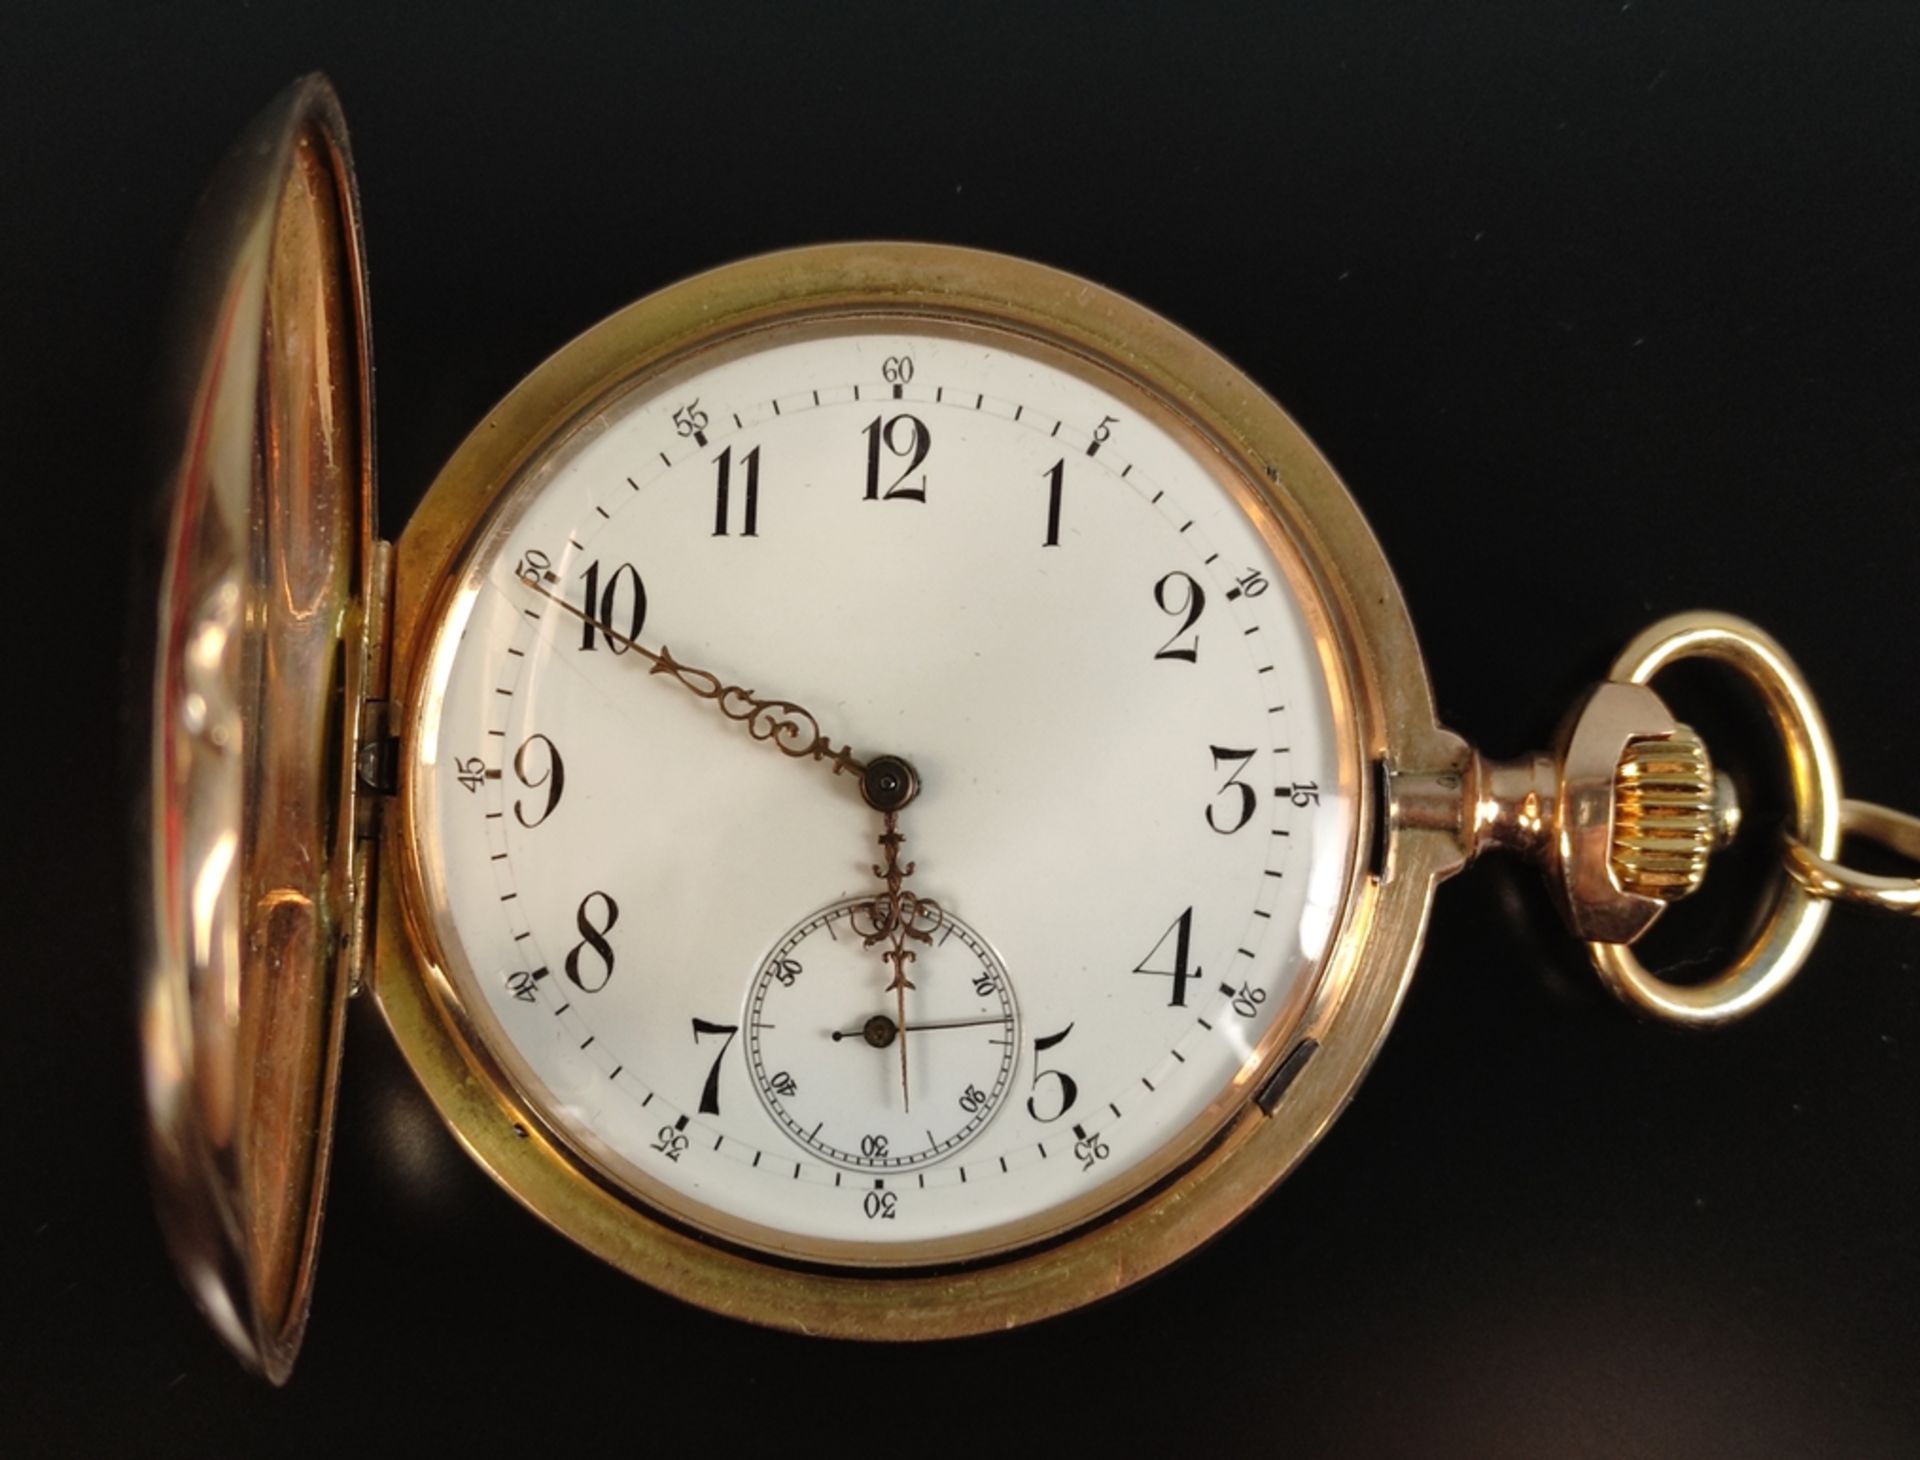 Savonette, pocket watch, spring cap, Systeme Glashütte, round dial with Arabic numerals, small seco